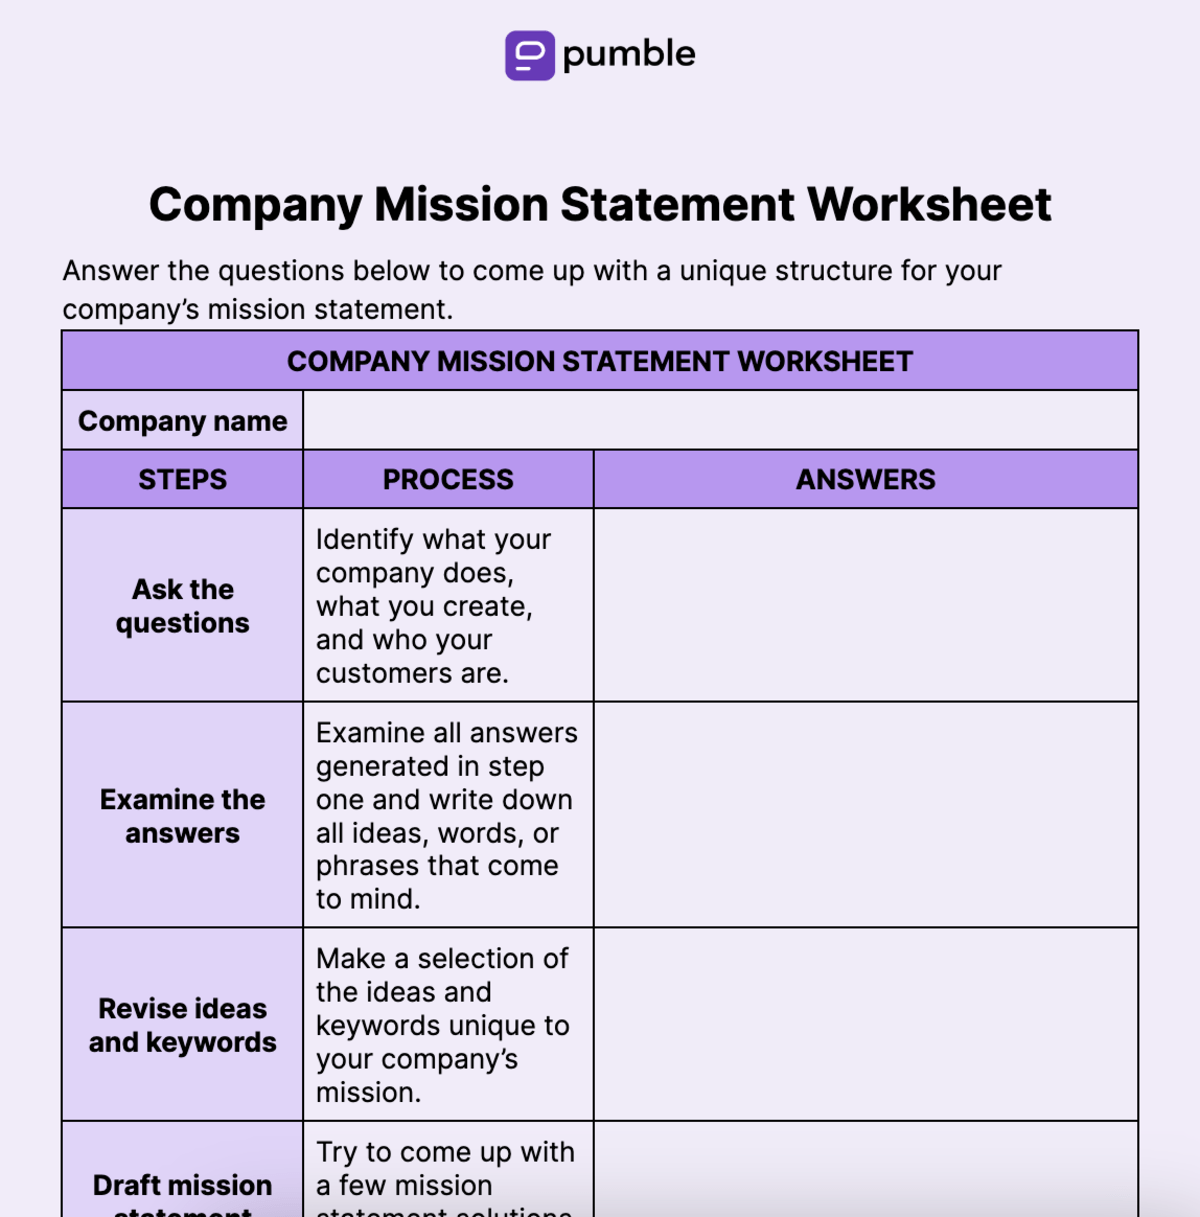 Company Mission Statement Worksheet